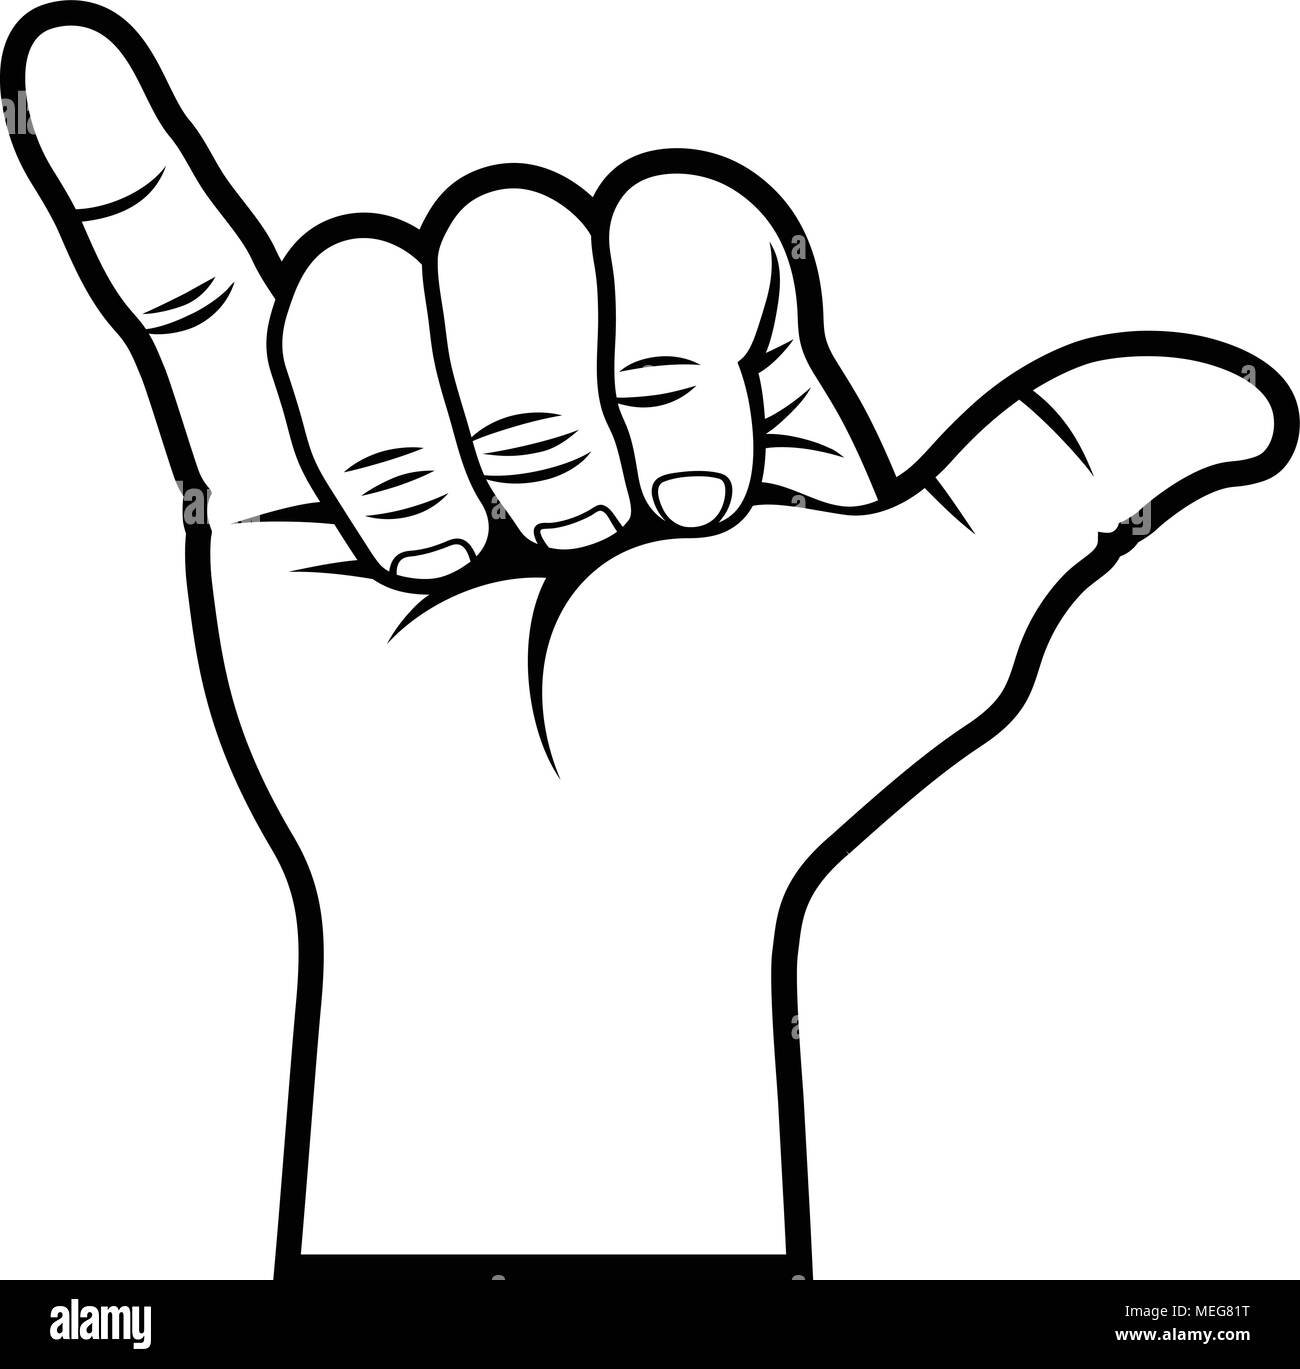 Shaka hand sign / Vector illustration Stock Vector